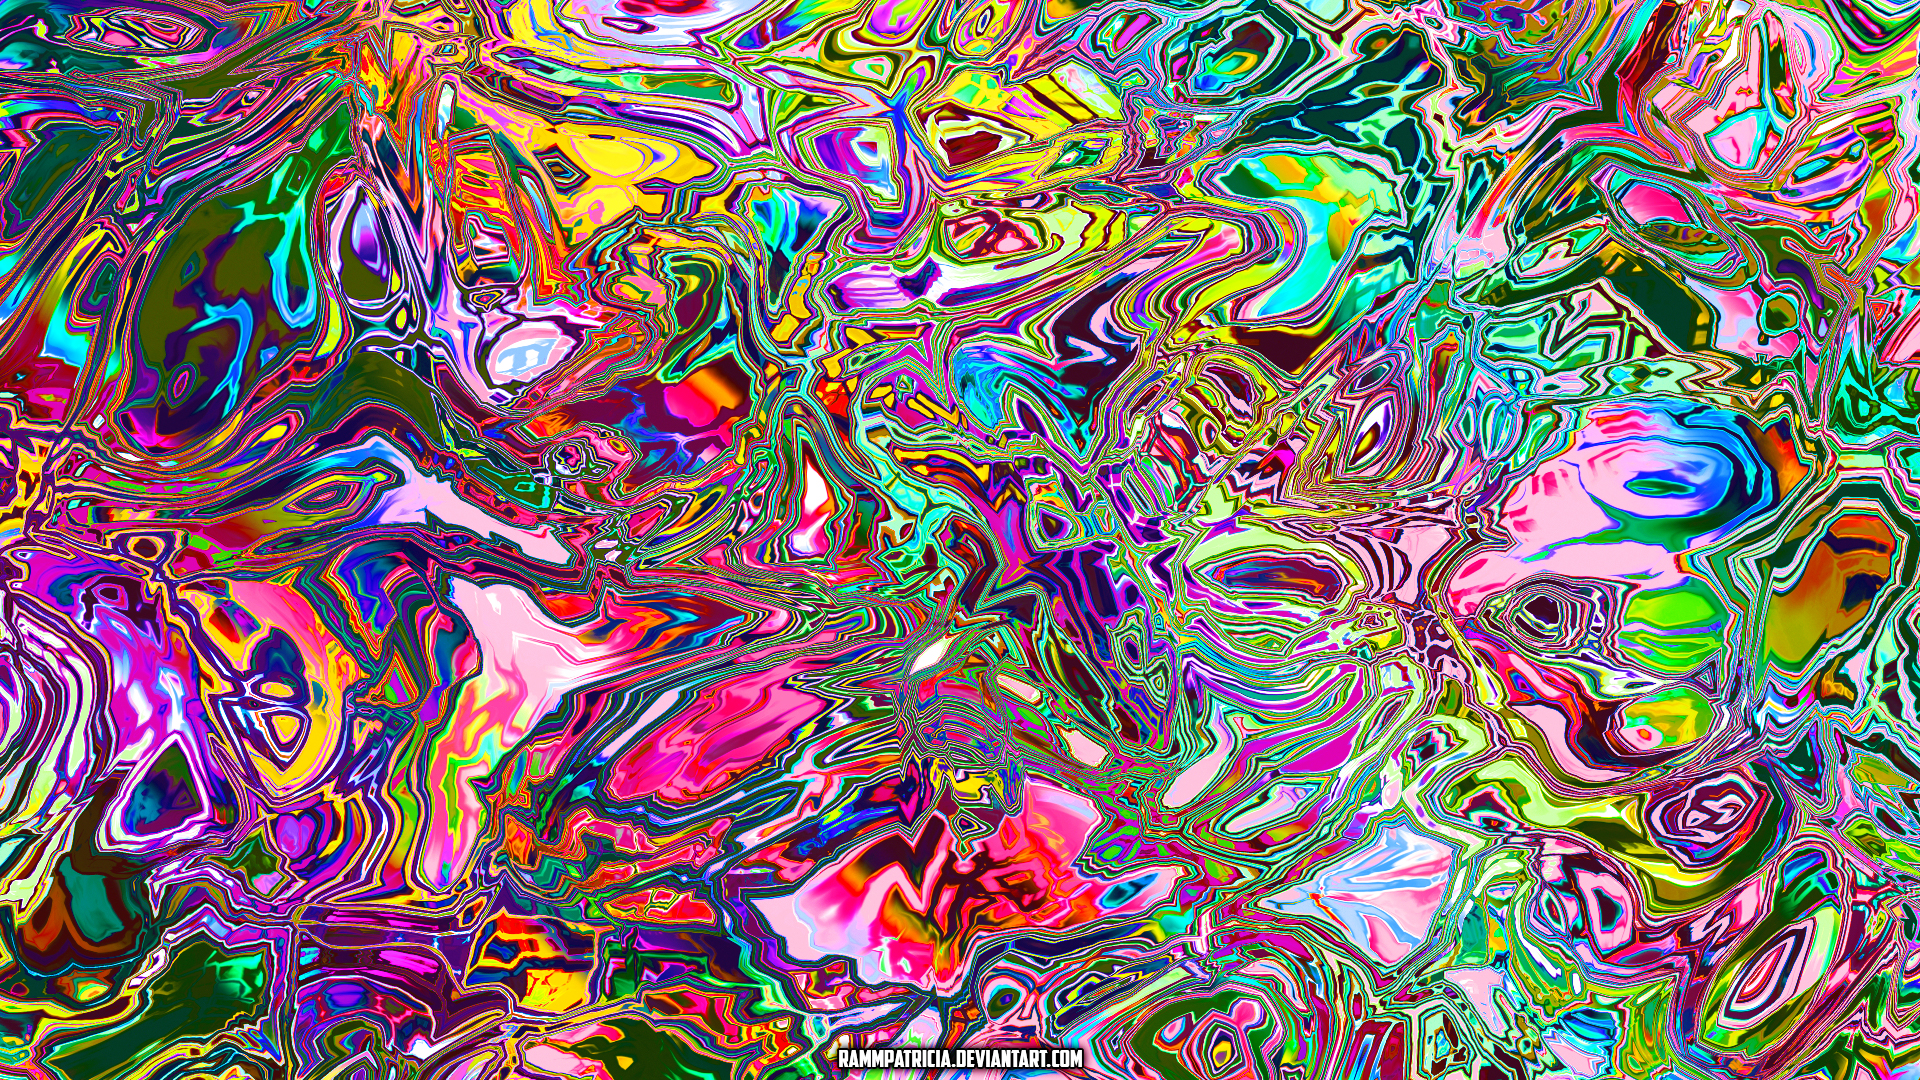 Digital Digital Art RammPatricia Iridescent Colorful 1920x1080